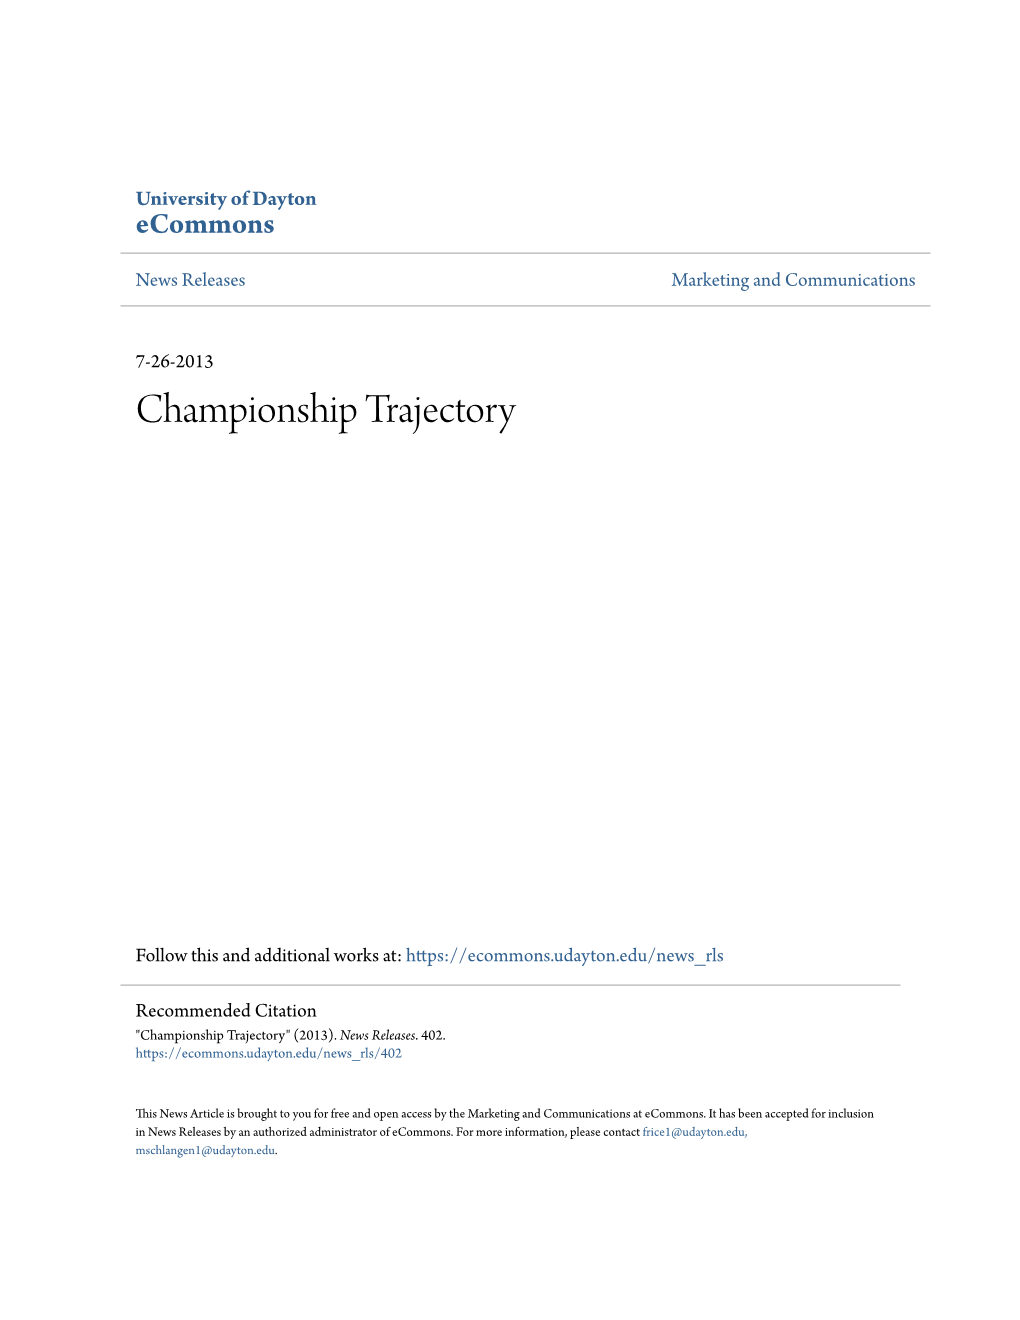 Championship Trajectory